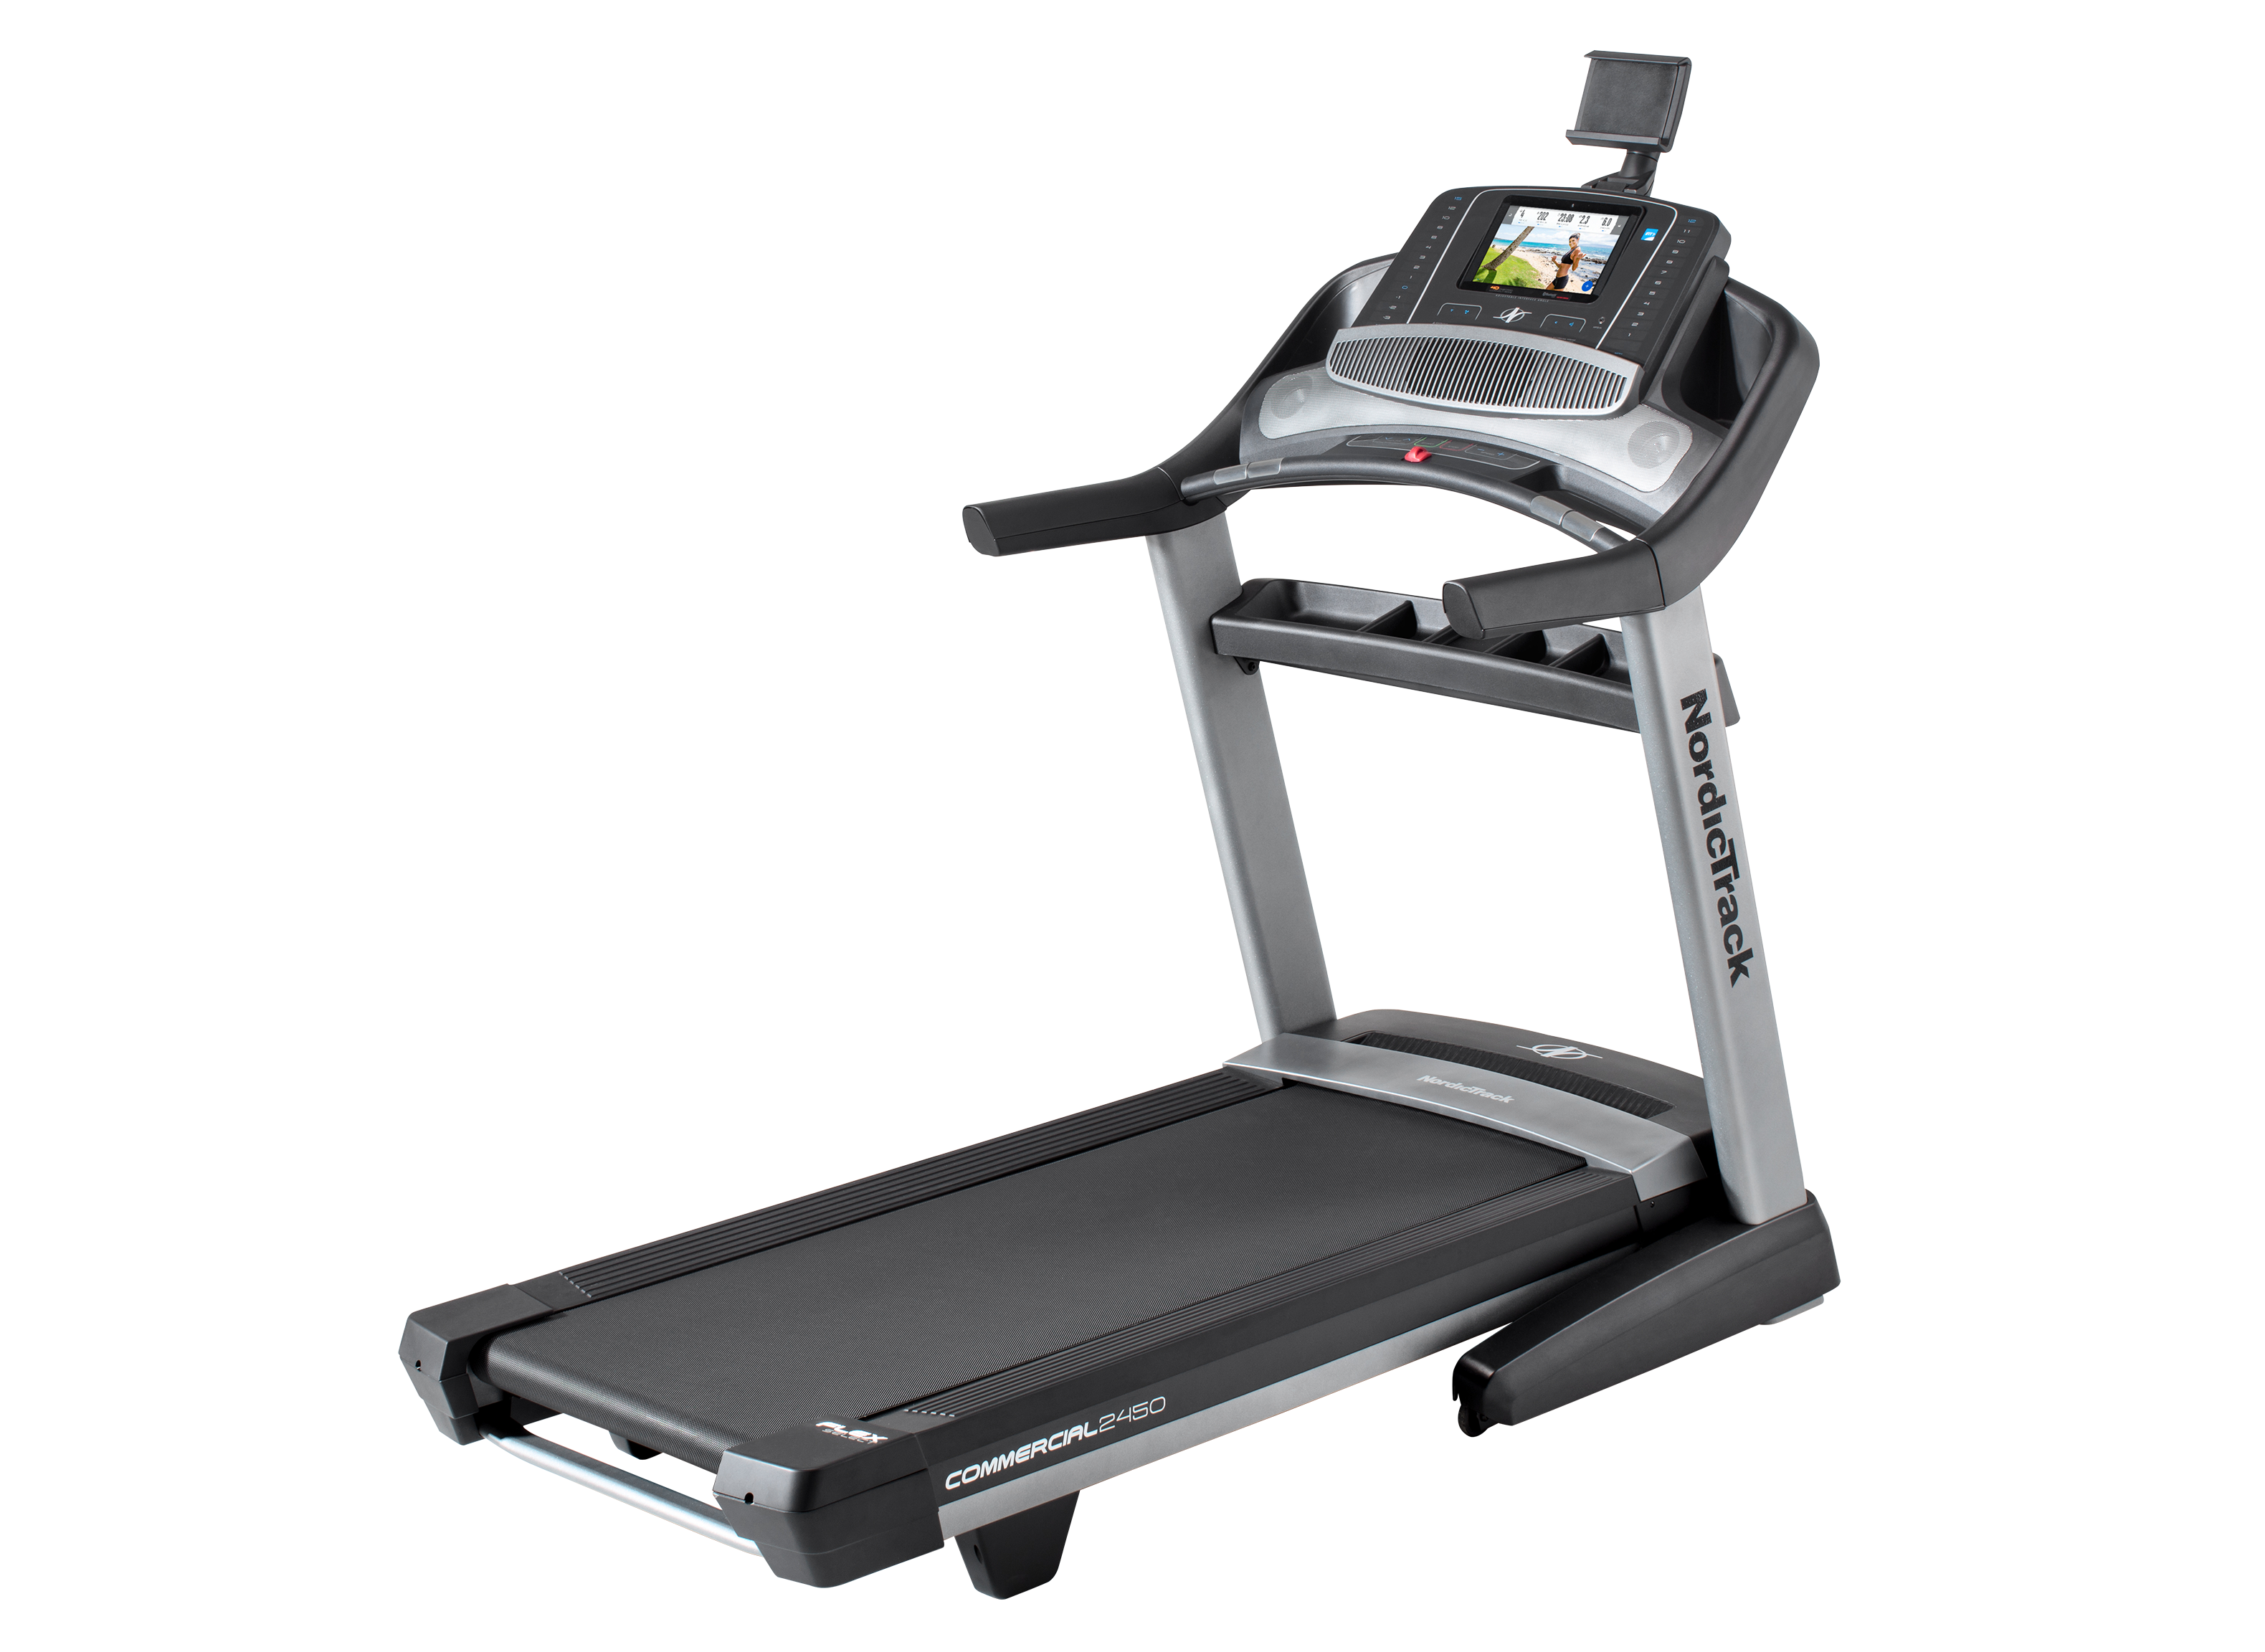 NordicTrack Commercial 2450 Treadmill Black NTL17122 - Best Buy